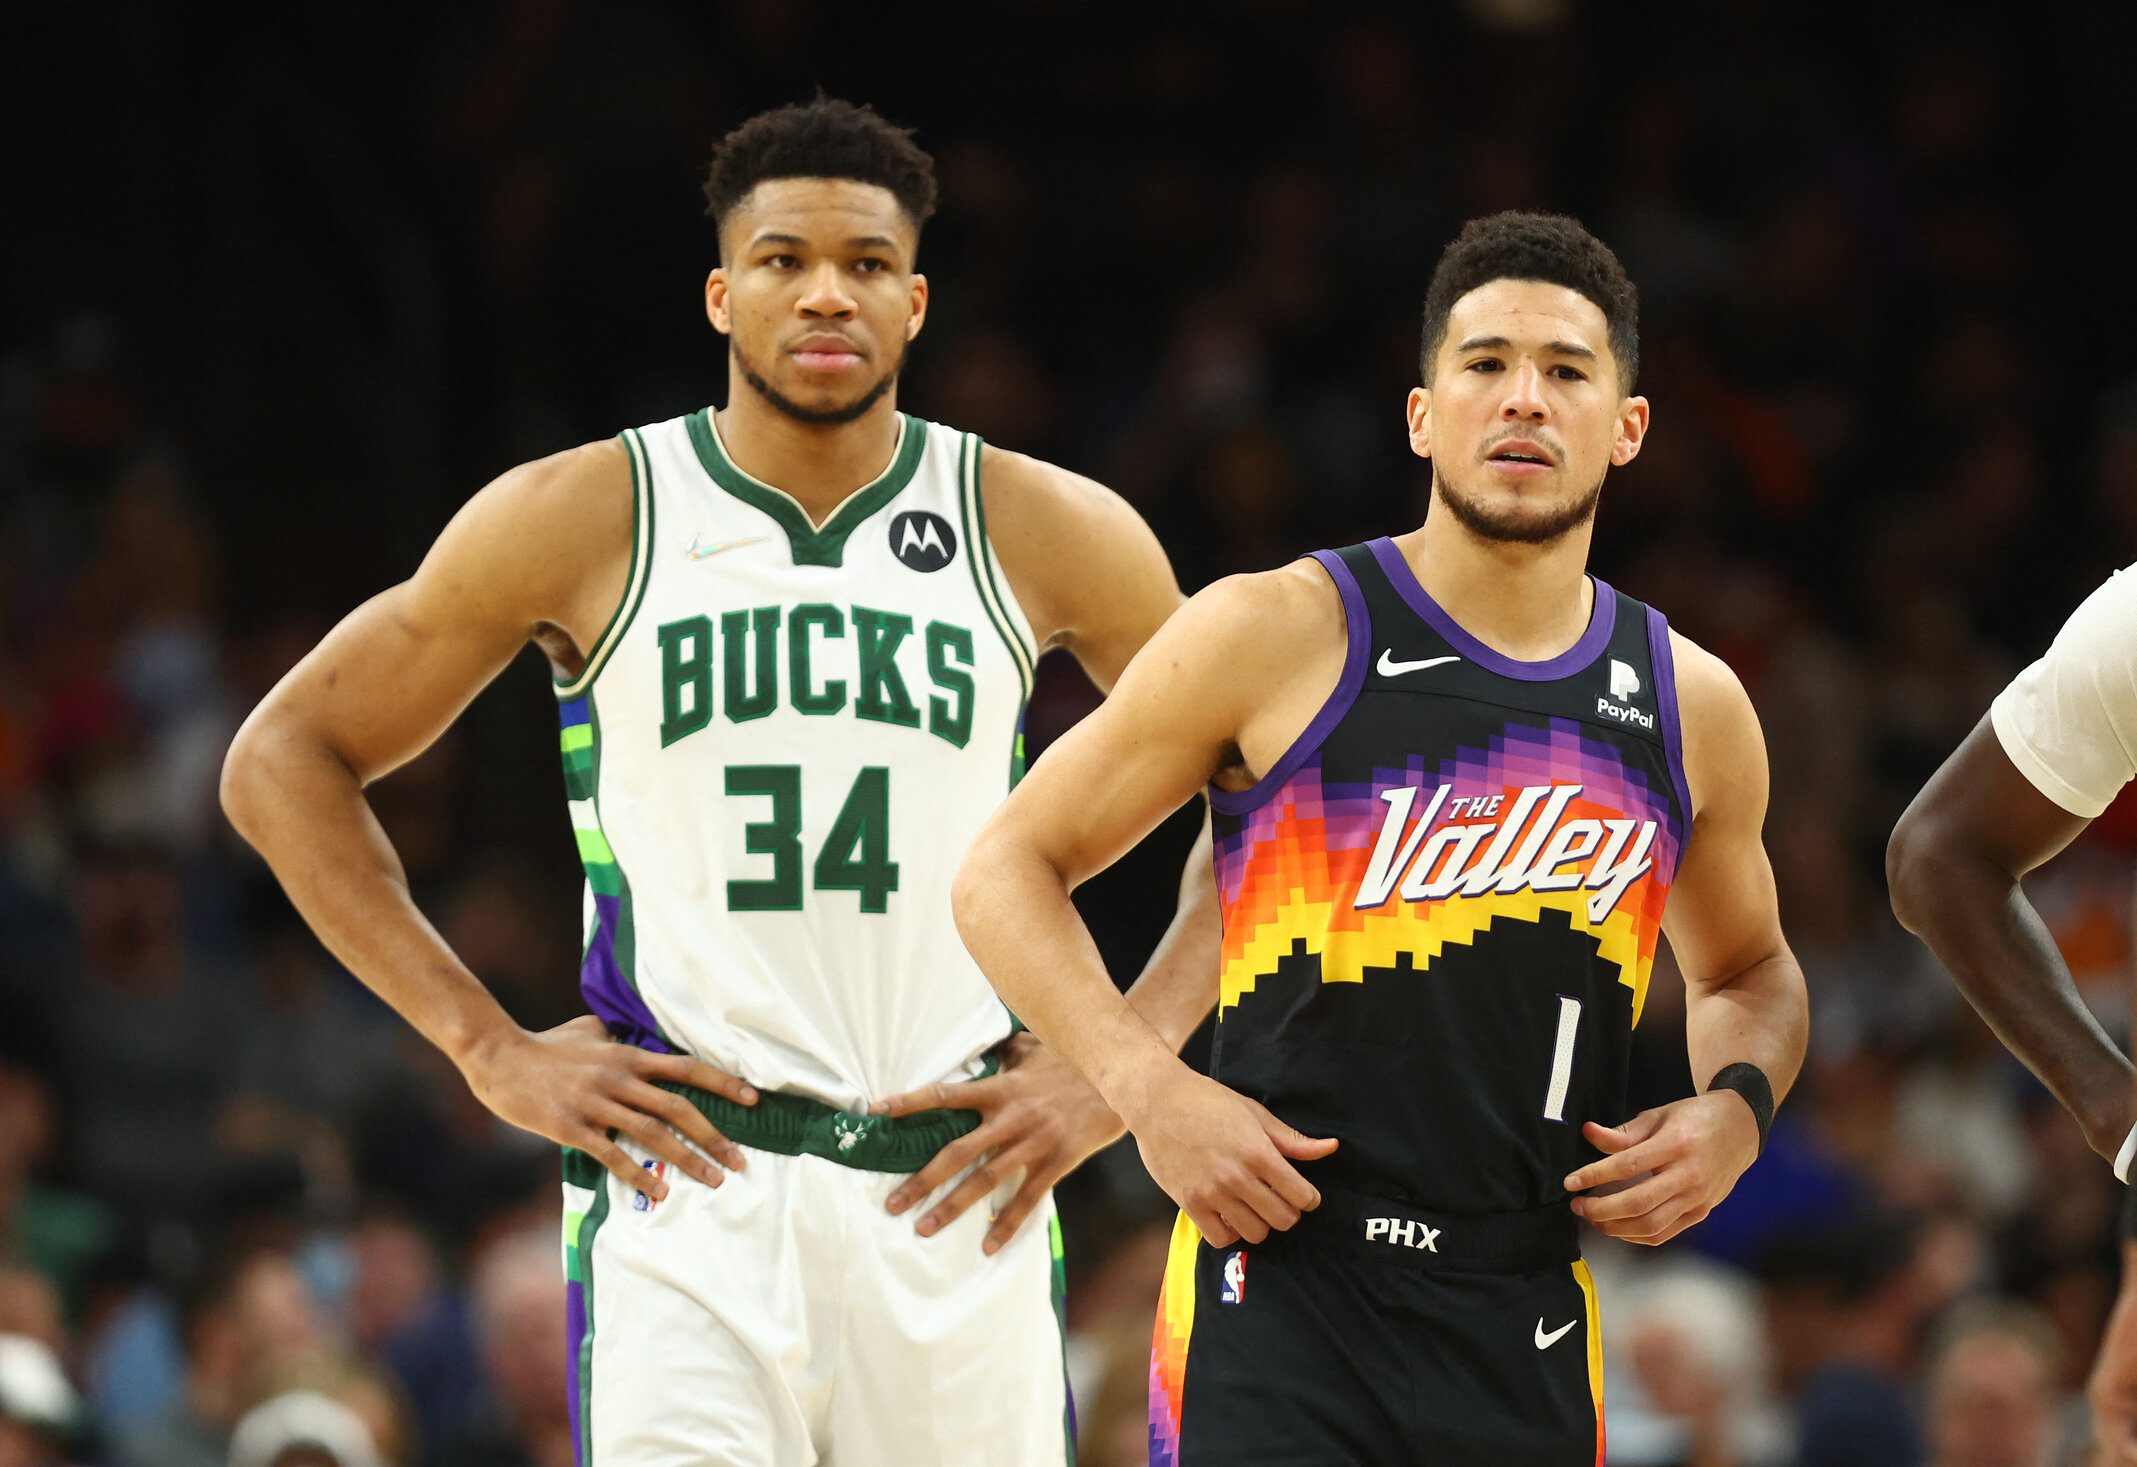 Suns manhandle Bucks in NBA Finals rematch